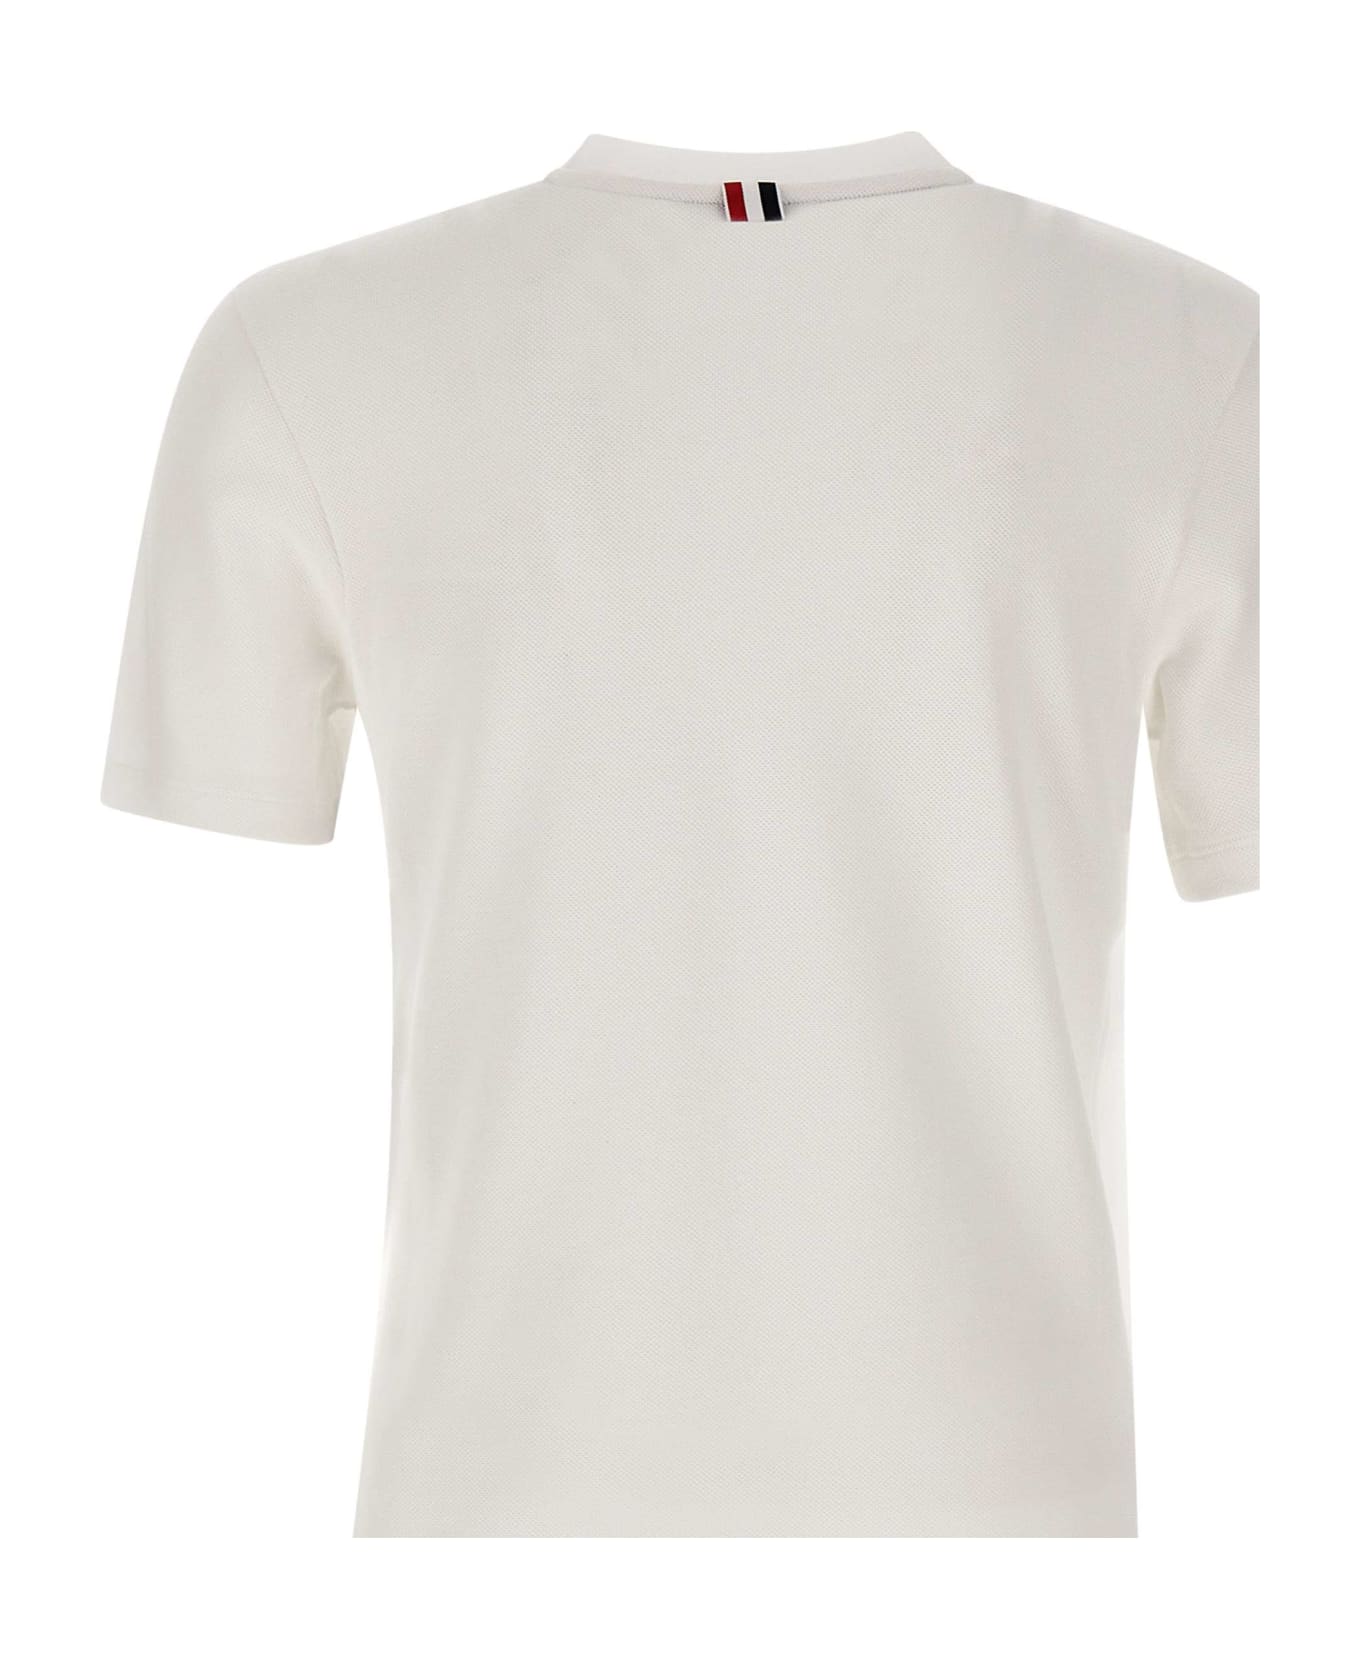 Thom Browne 'short Sleeve Tee' Cotton T-shirt - White